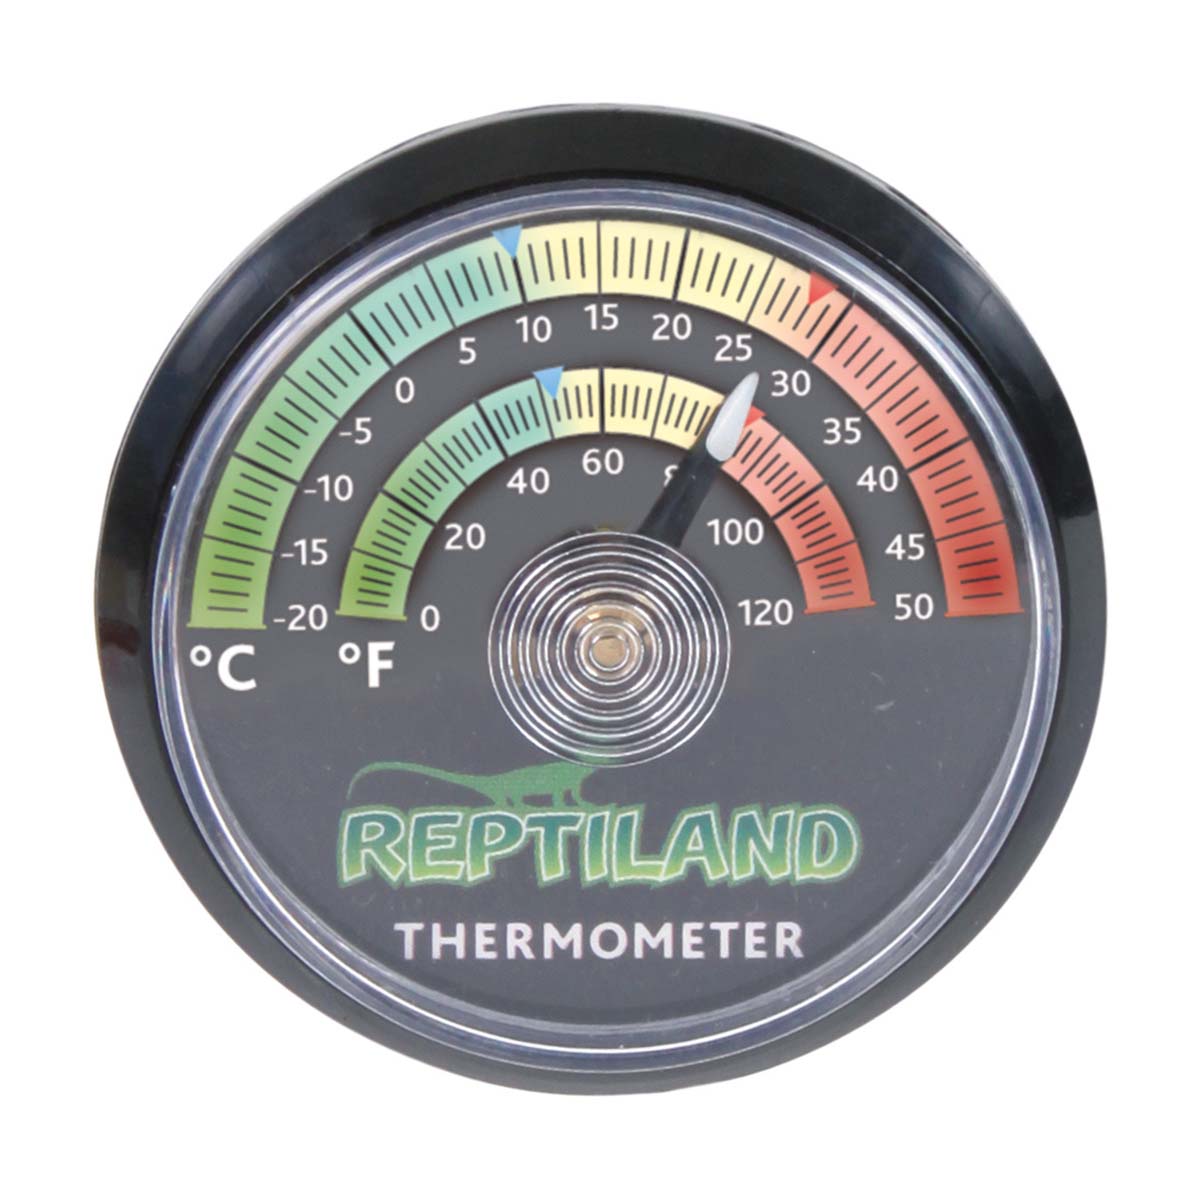 Thermometre Analogique - Terranimo